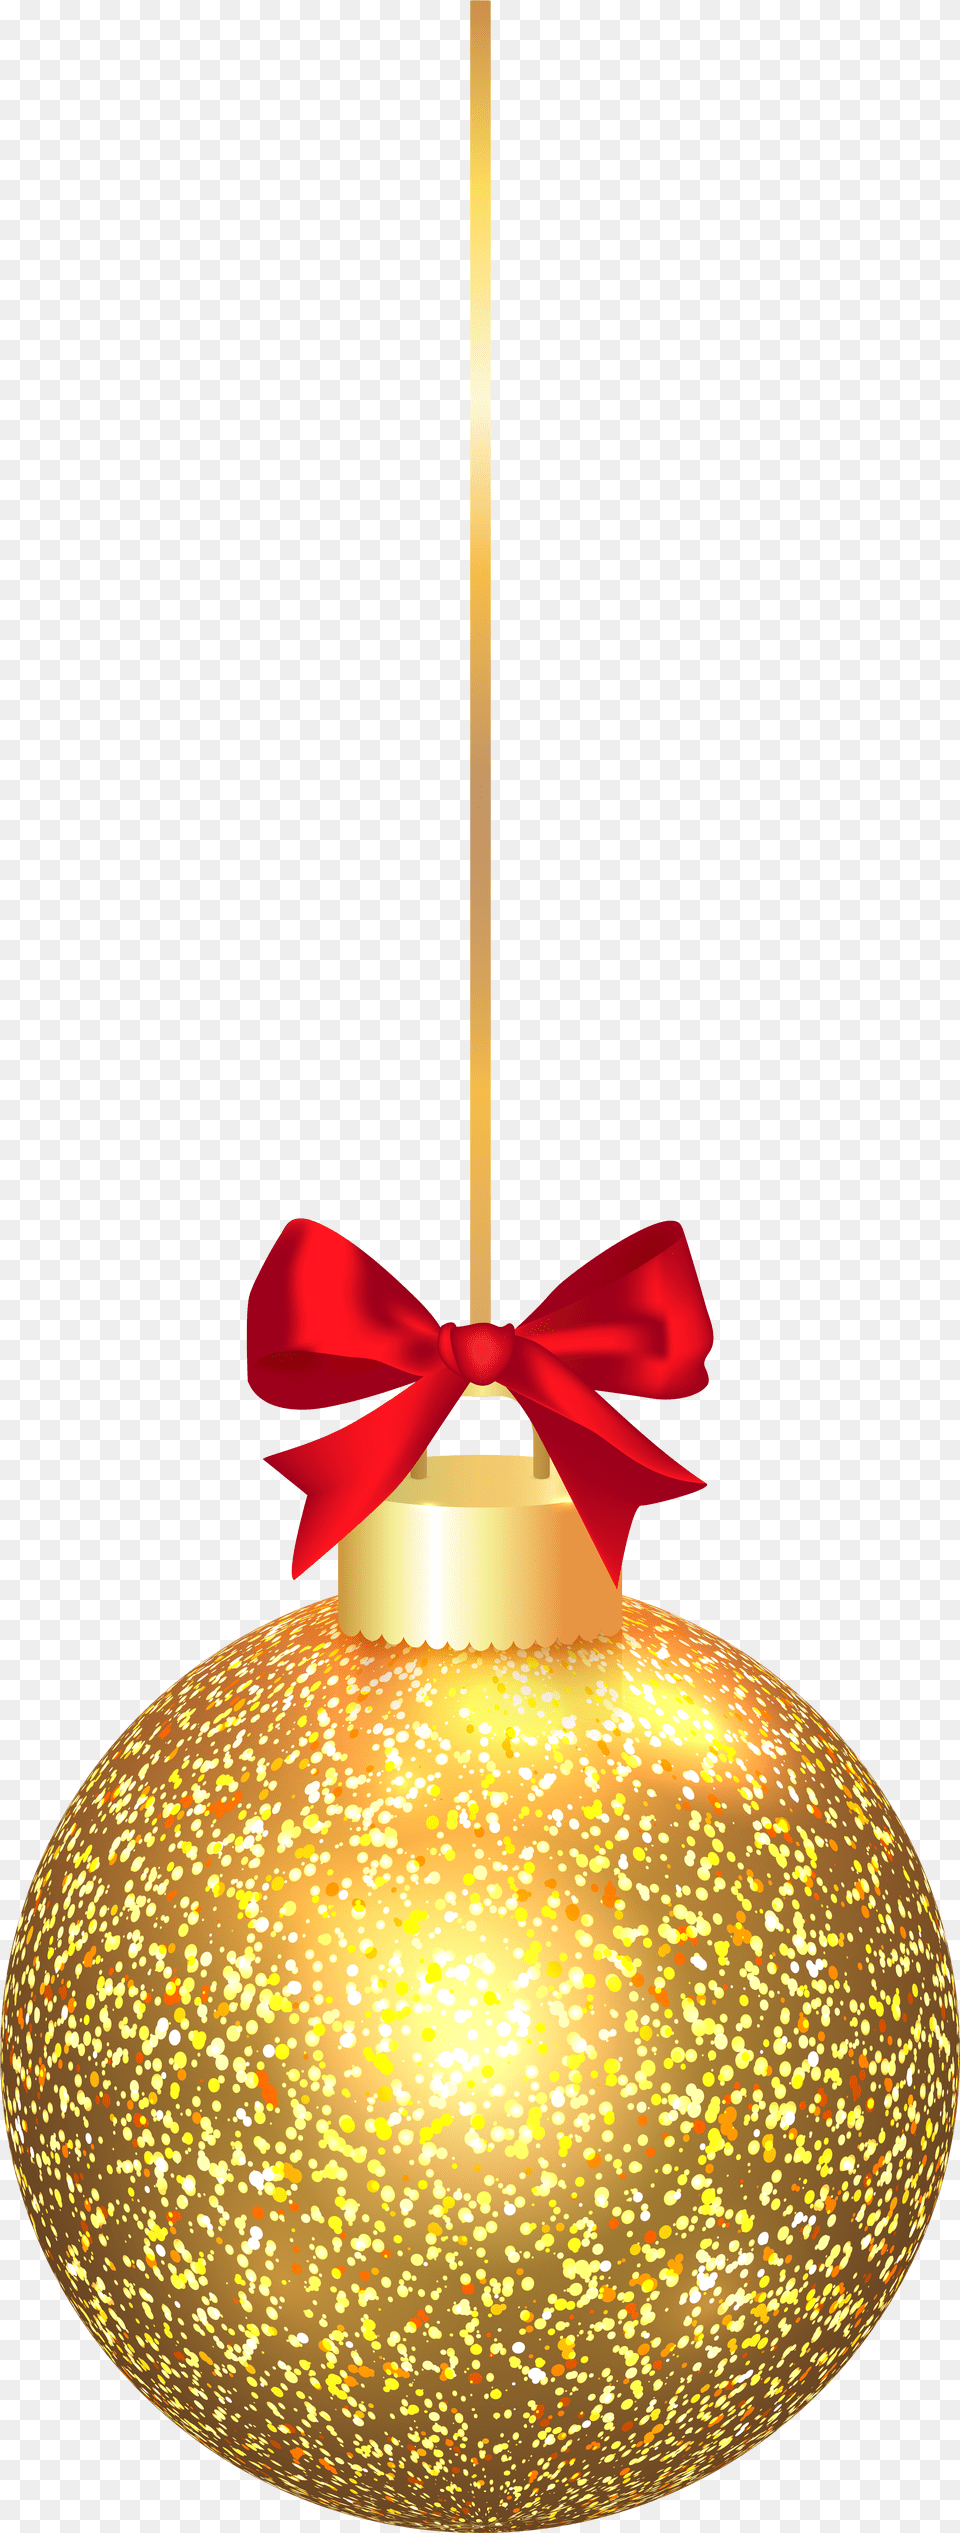 Christmas Clipart Elegant Elegant Christmas Images Clipart Free Transparent Png